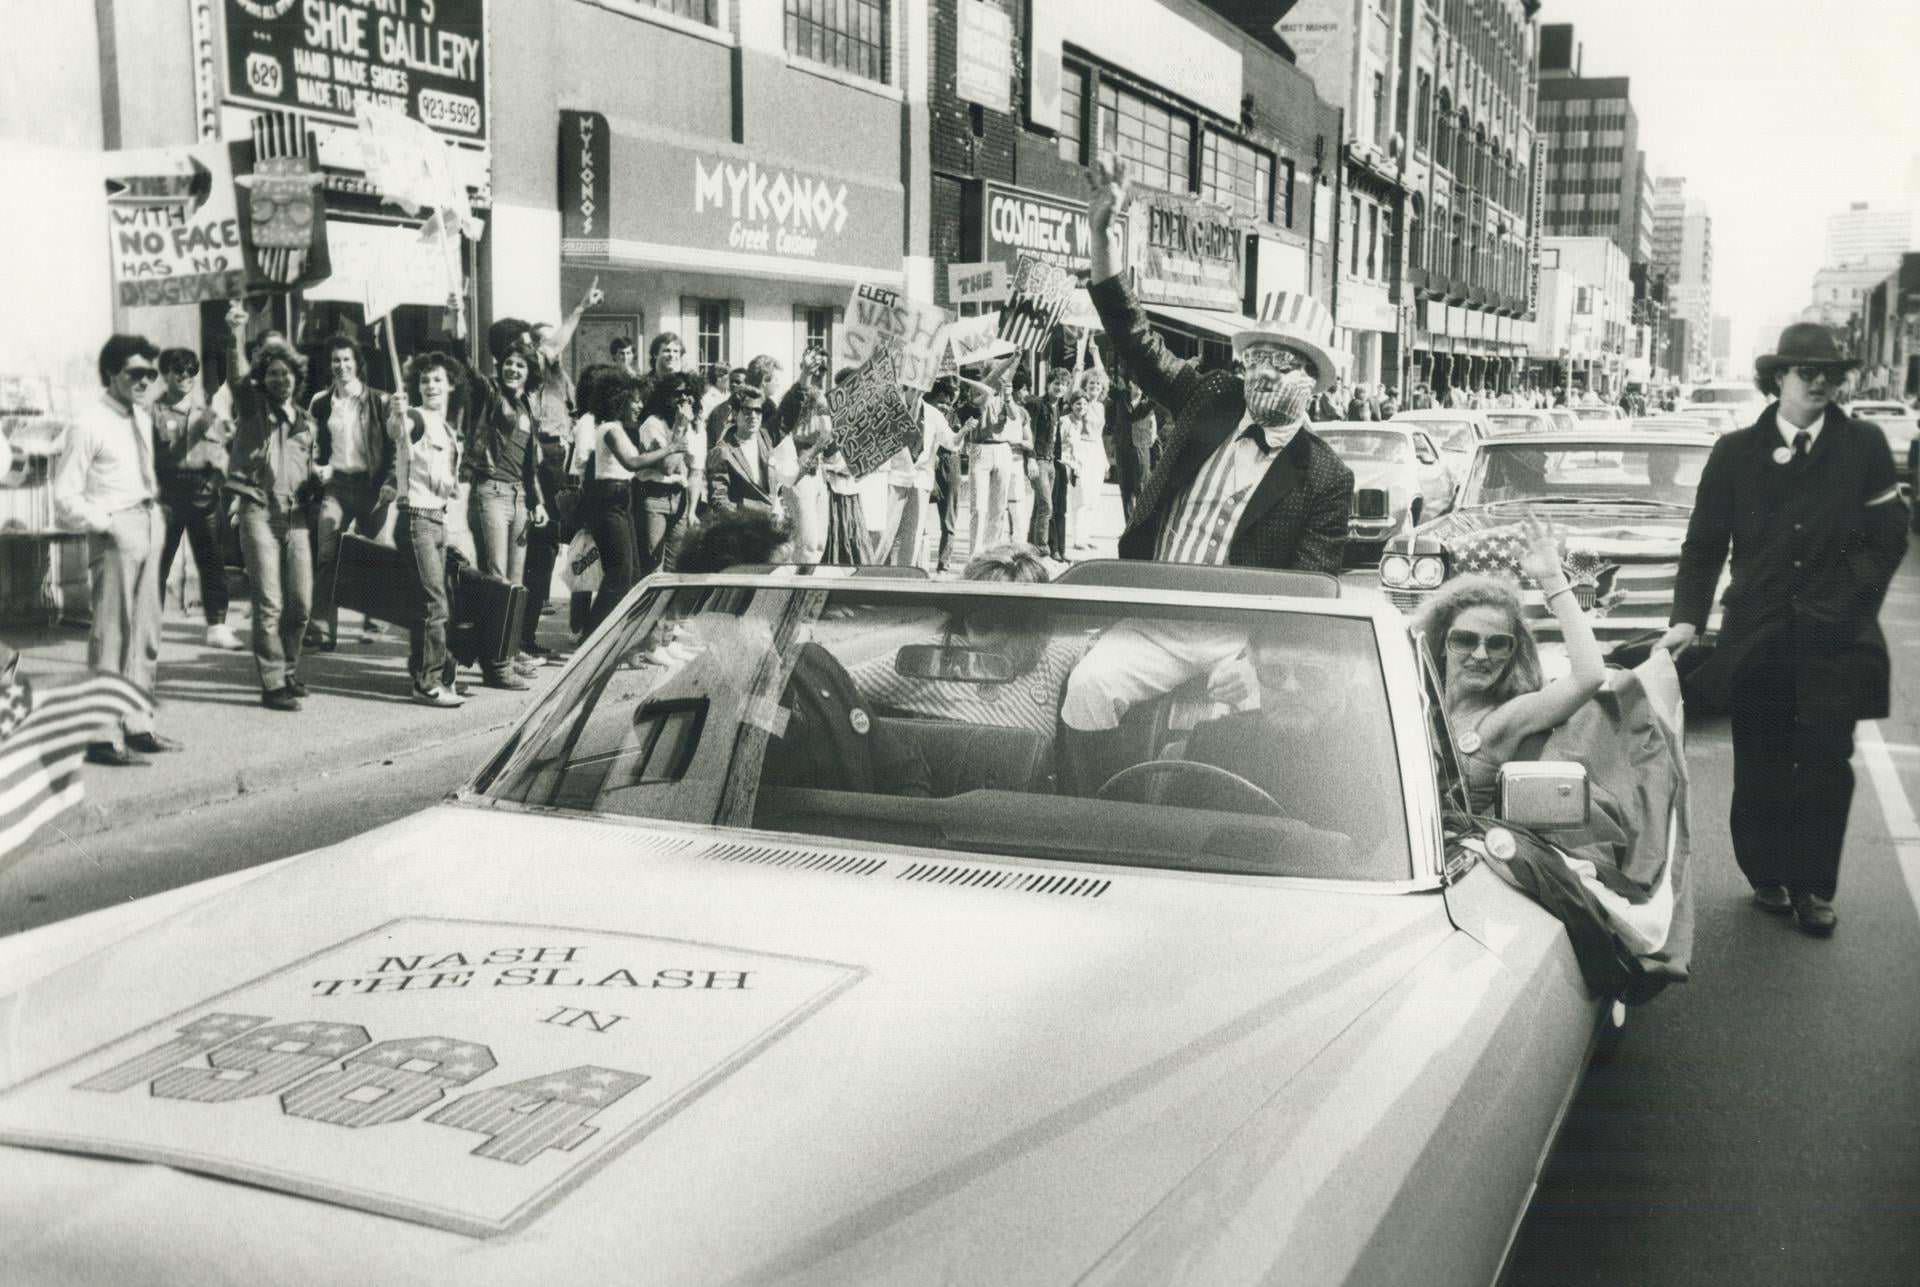 Nash The Slash, rock fiddler extraordinaire, staged a surprise motorcade down Yonge St., 1984